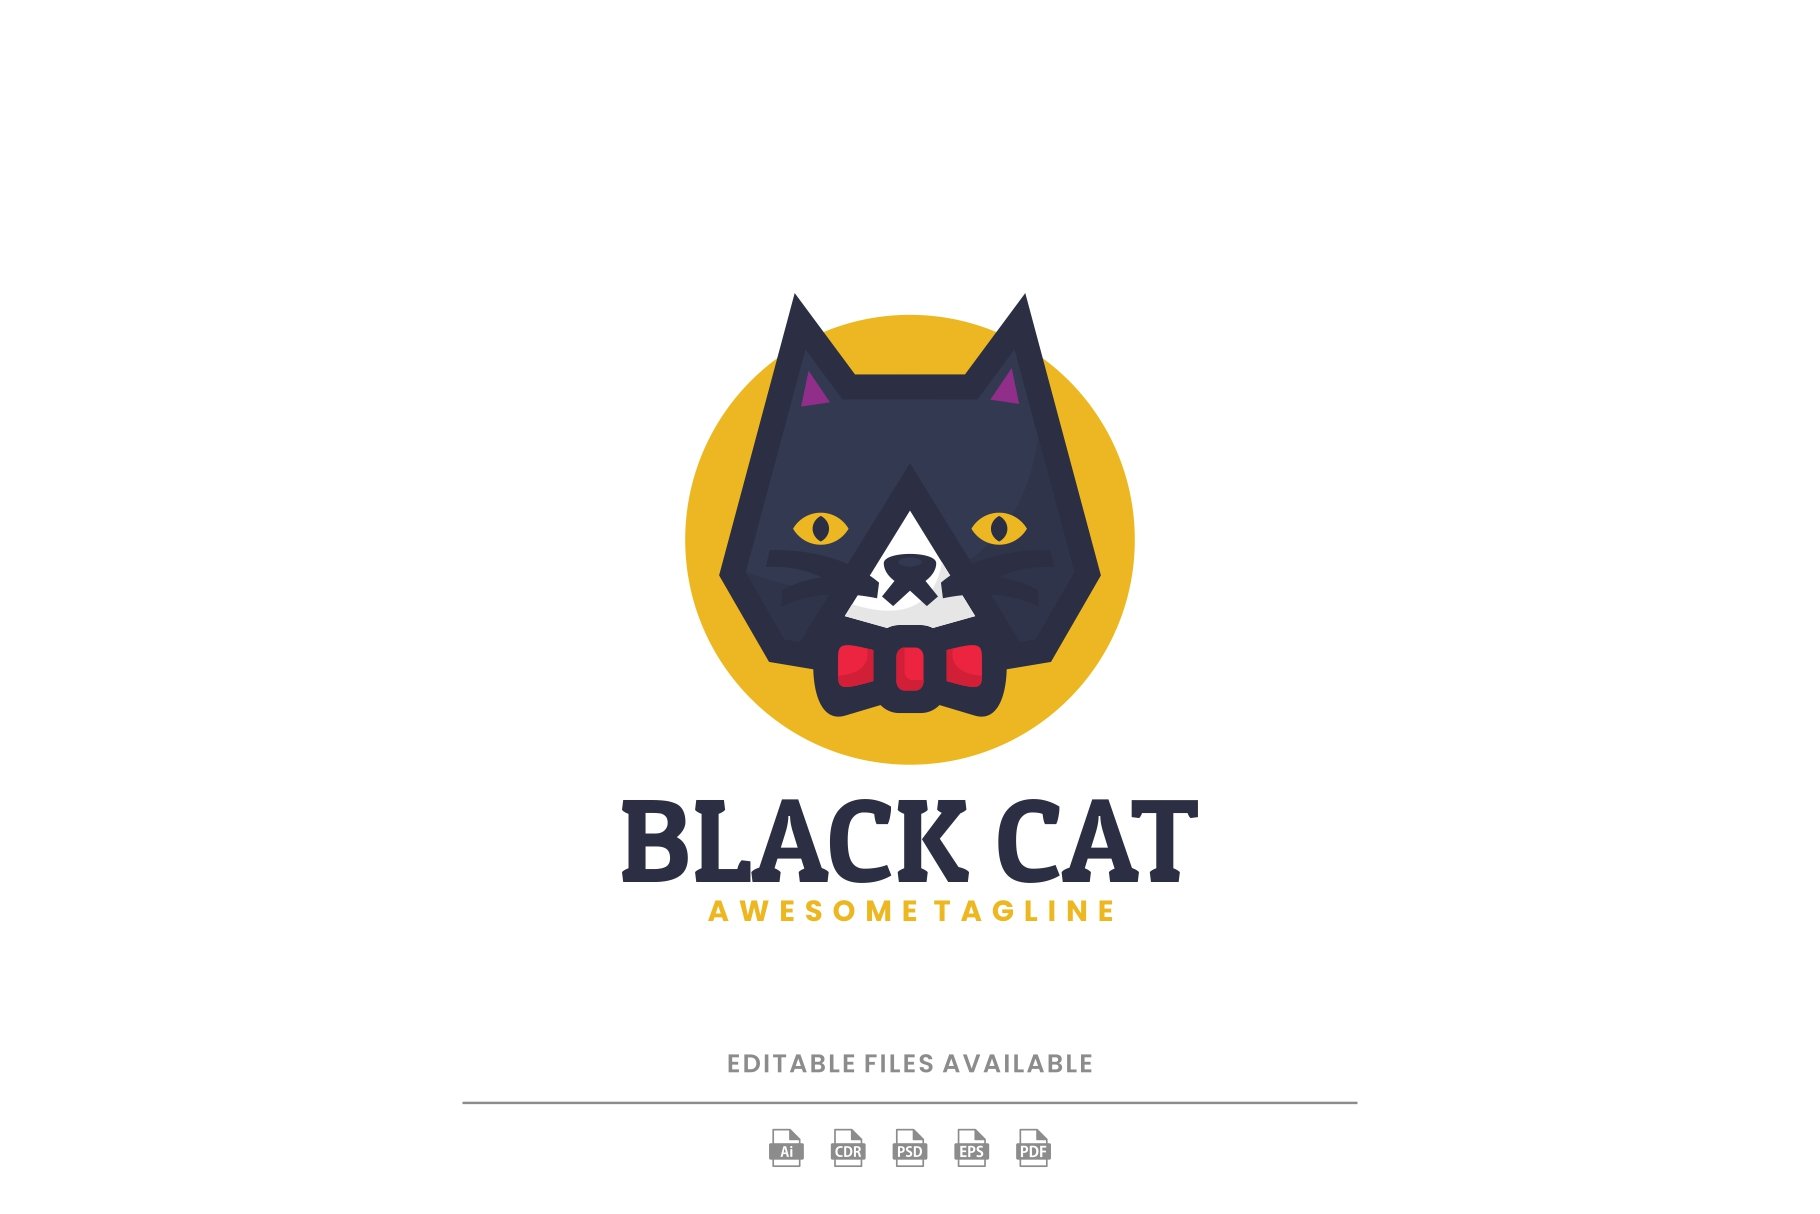 Black Cat Simple Logo cover image.